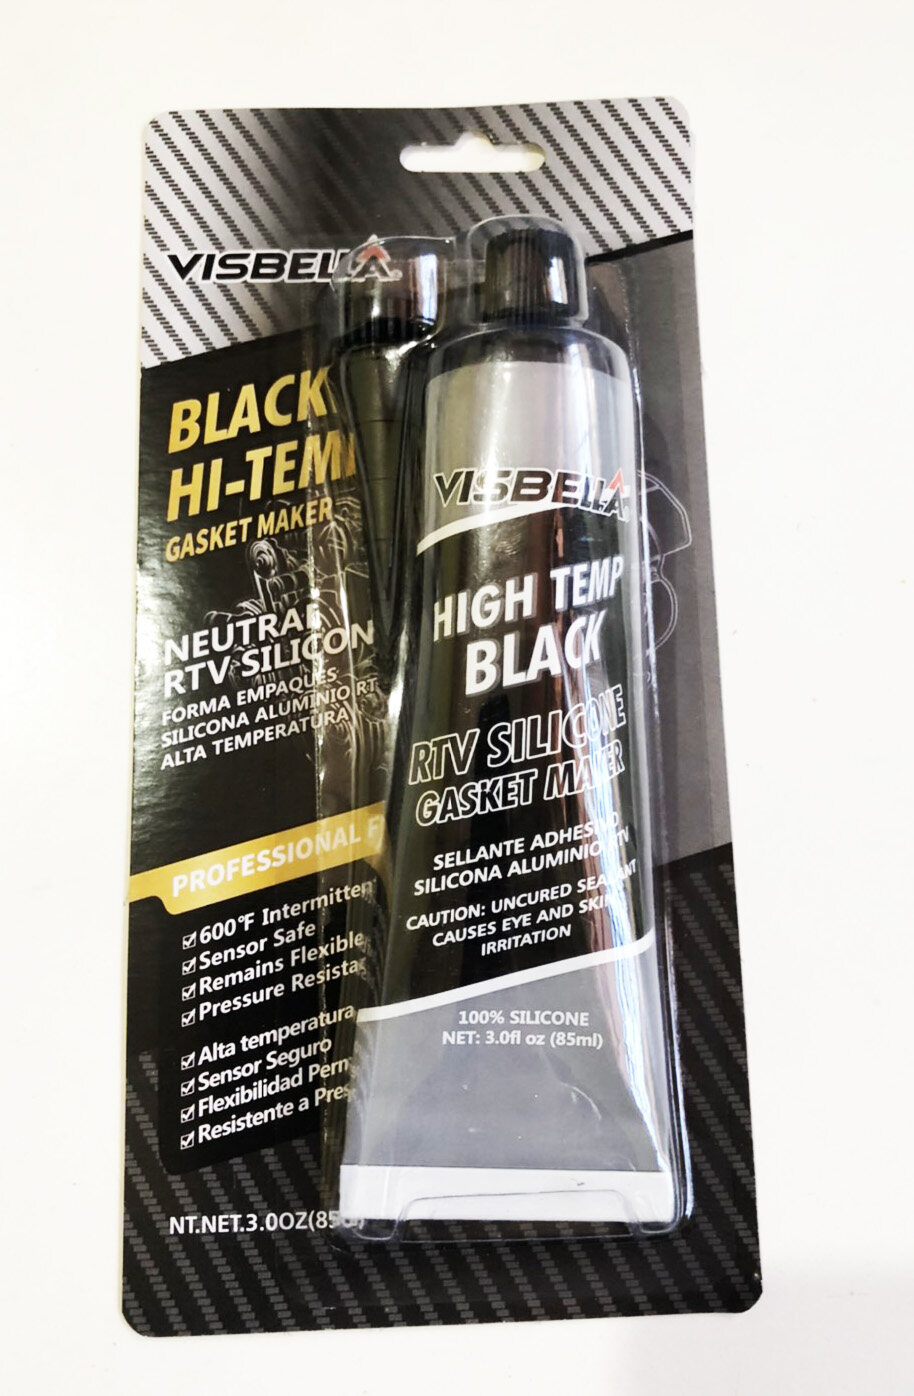 VISBELLA High Temp Black RTV Silicone Gasket Maker 85ml กาวปะเก็นซิลิโคน ดำ กาวซิลิโคน กาวดำทาประเก็น กาวทาปะเก็น